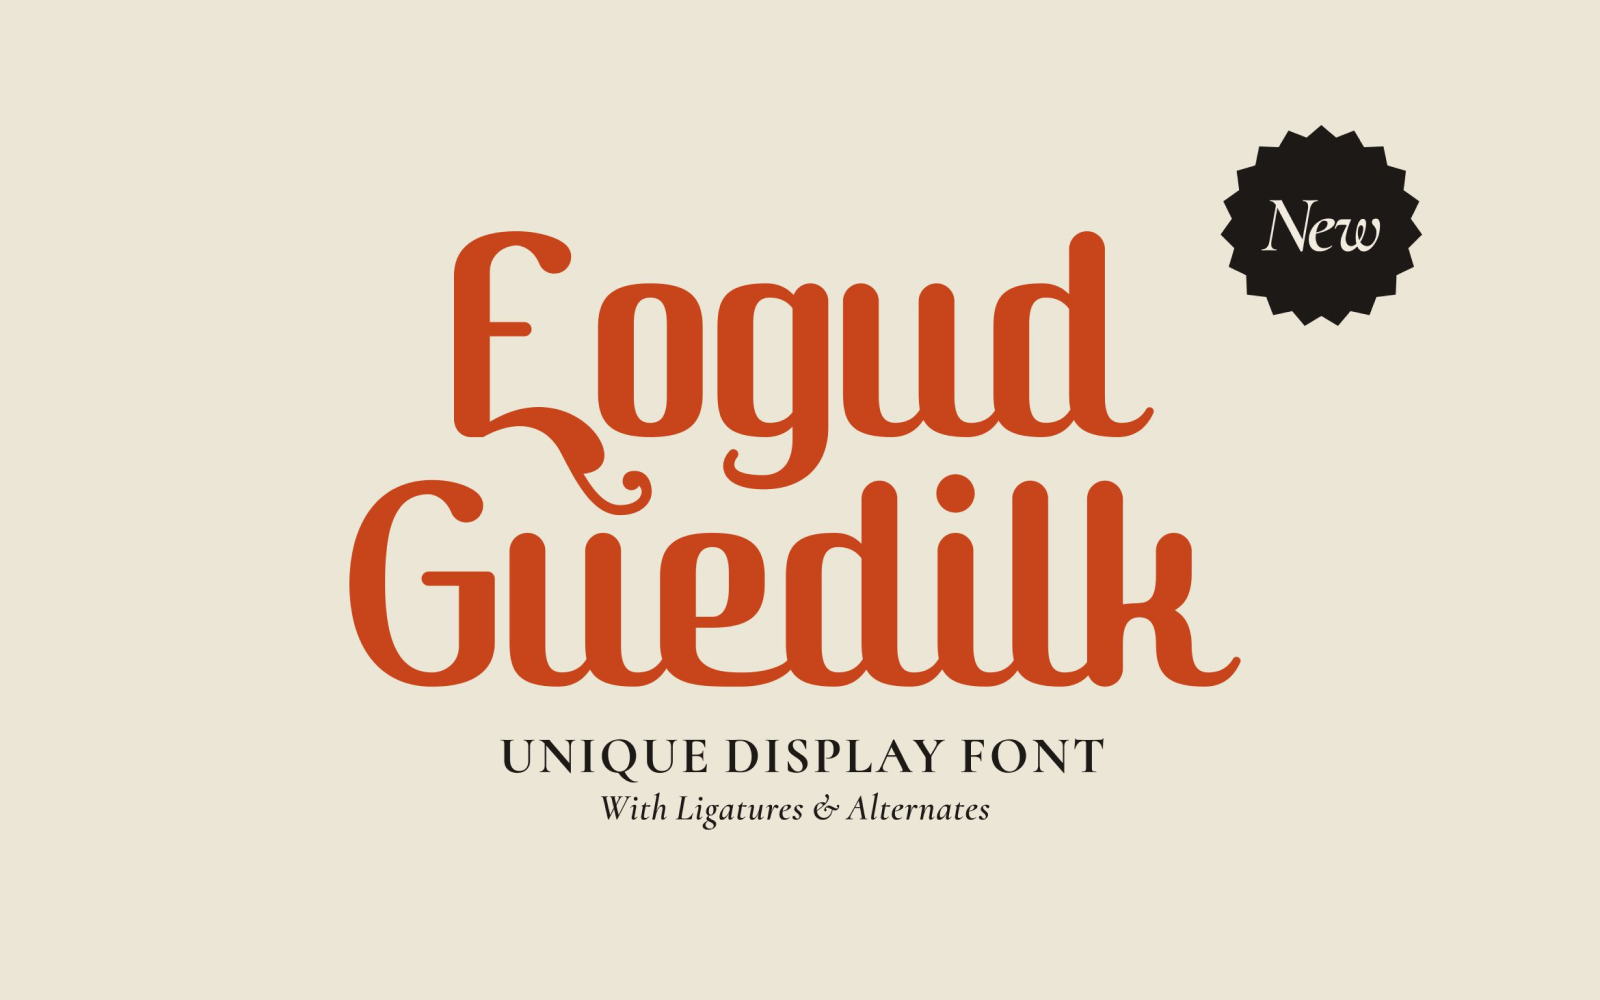 Eugod Guedilk Display Typeface